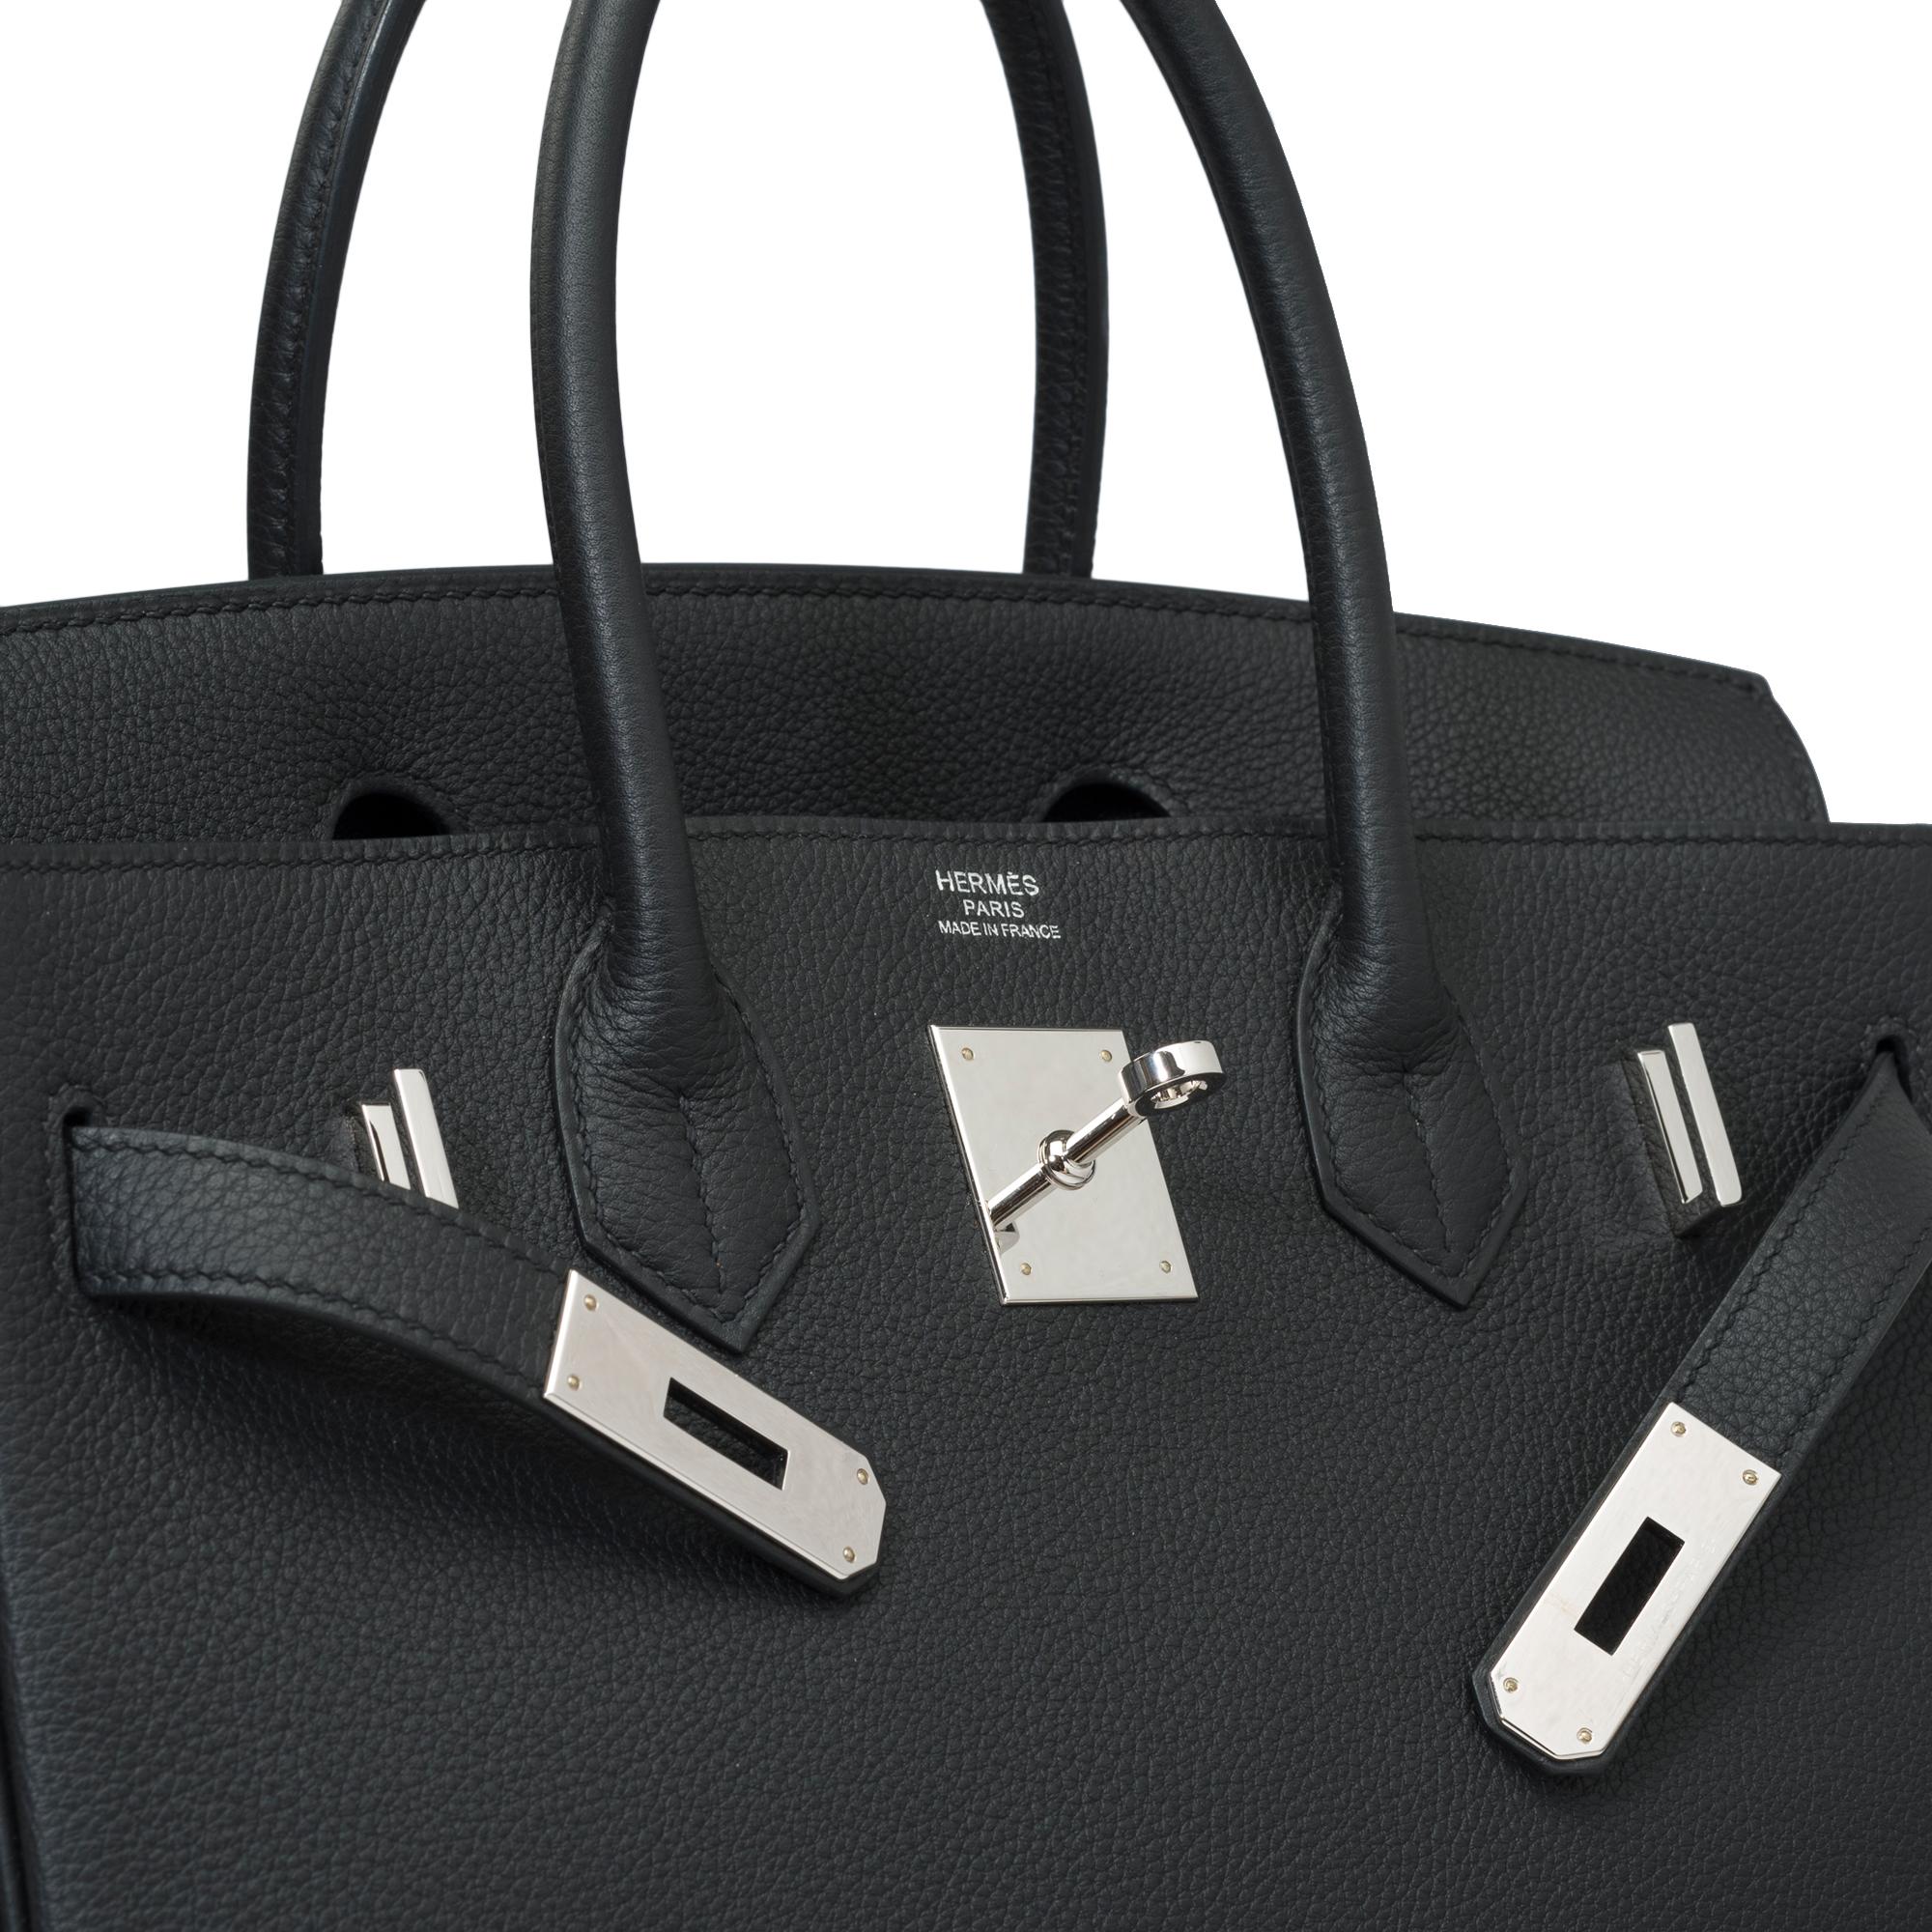 Splendid Hermes Birkin 30 handbag in Black Togo leather, SHW For Sale 2